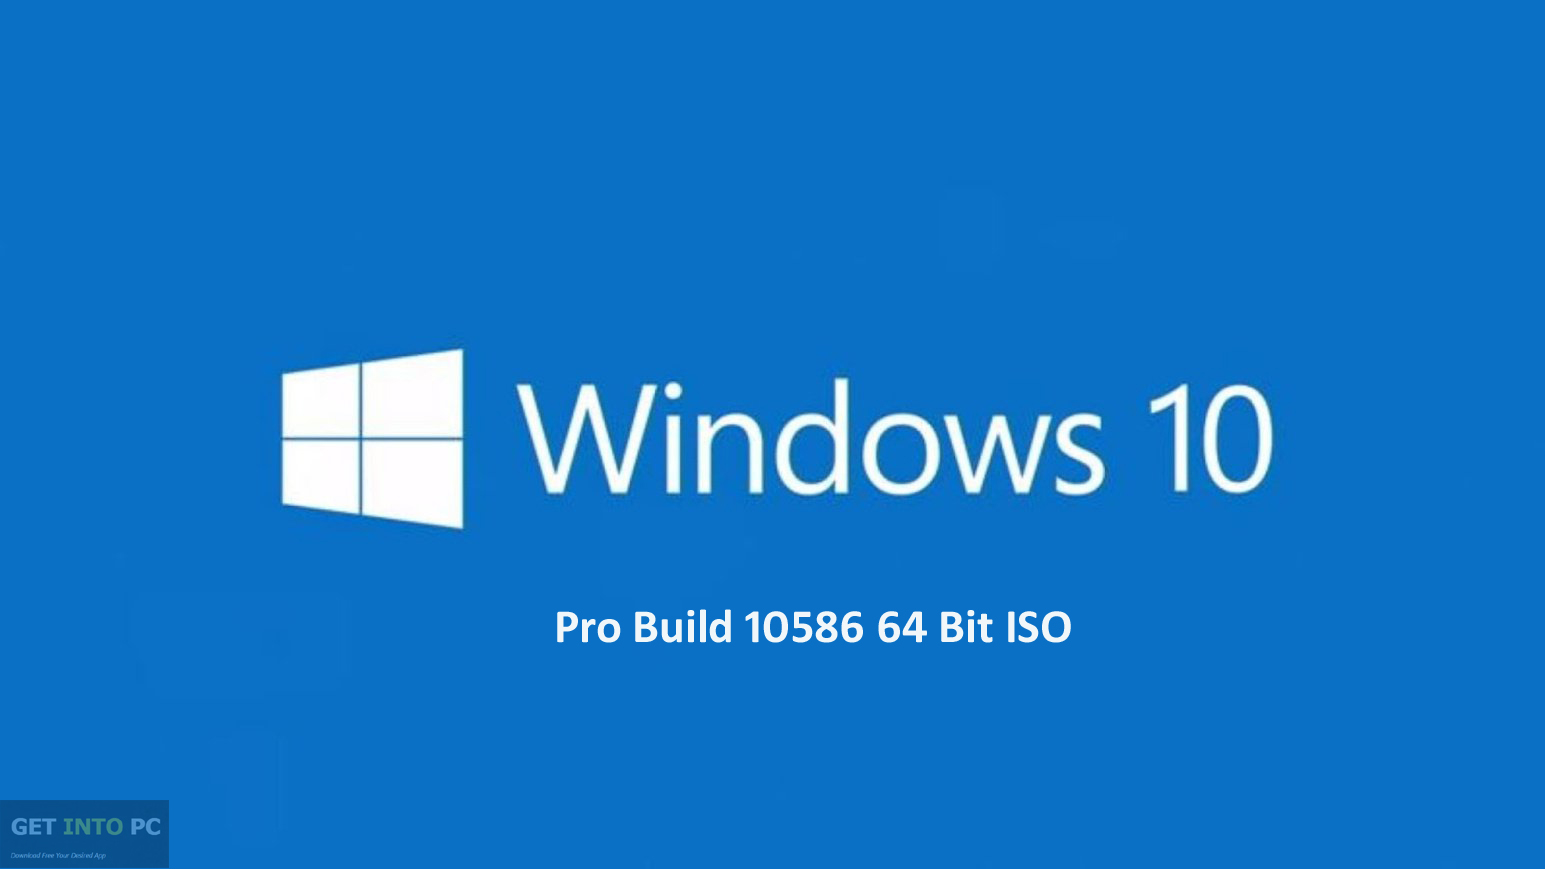 windows 10 download iso 64 bit full version torrents